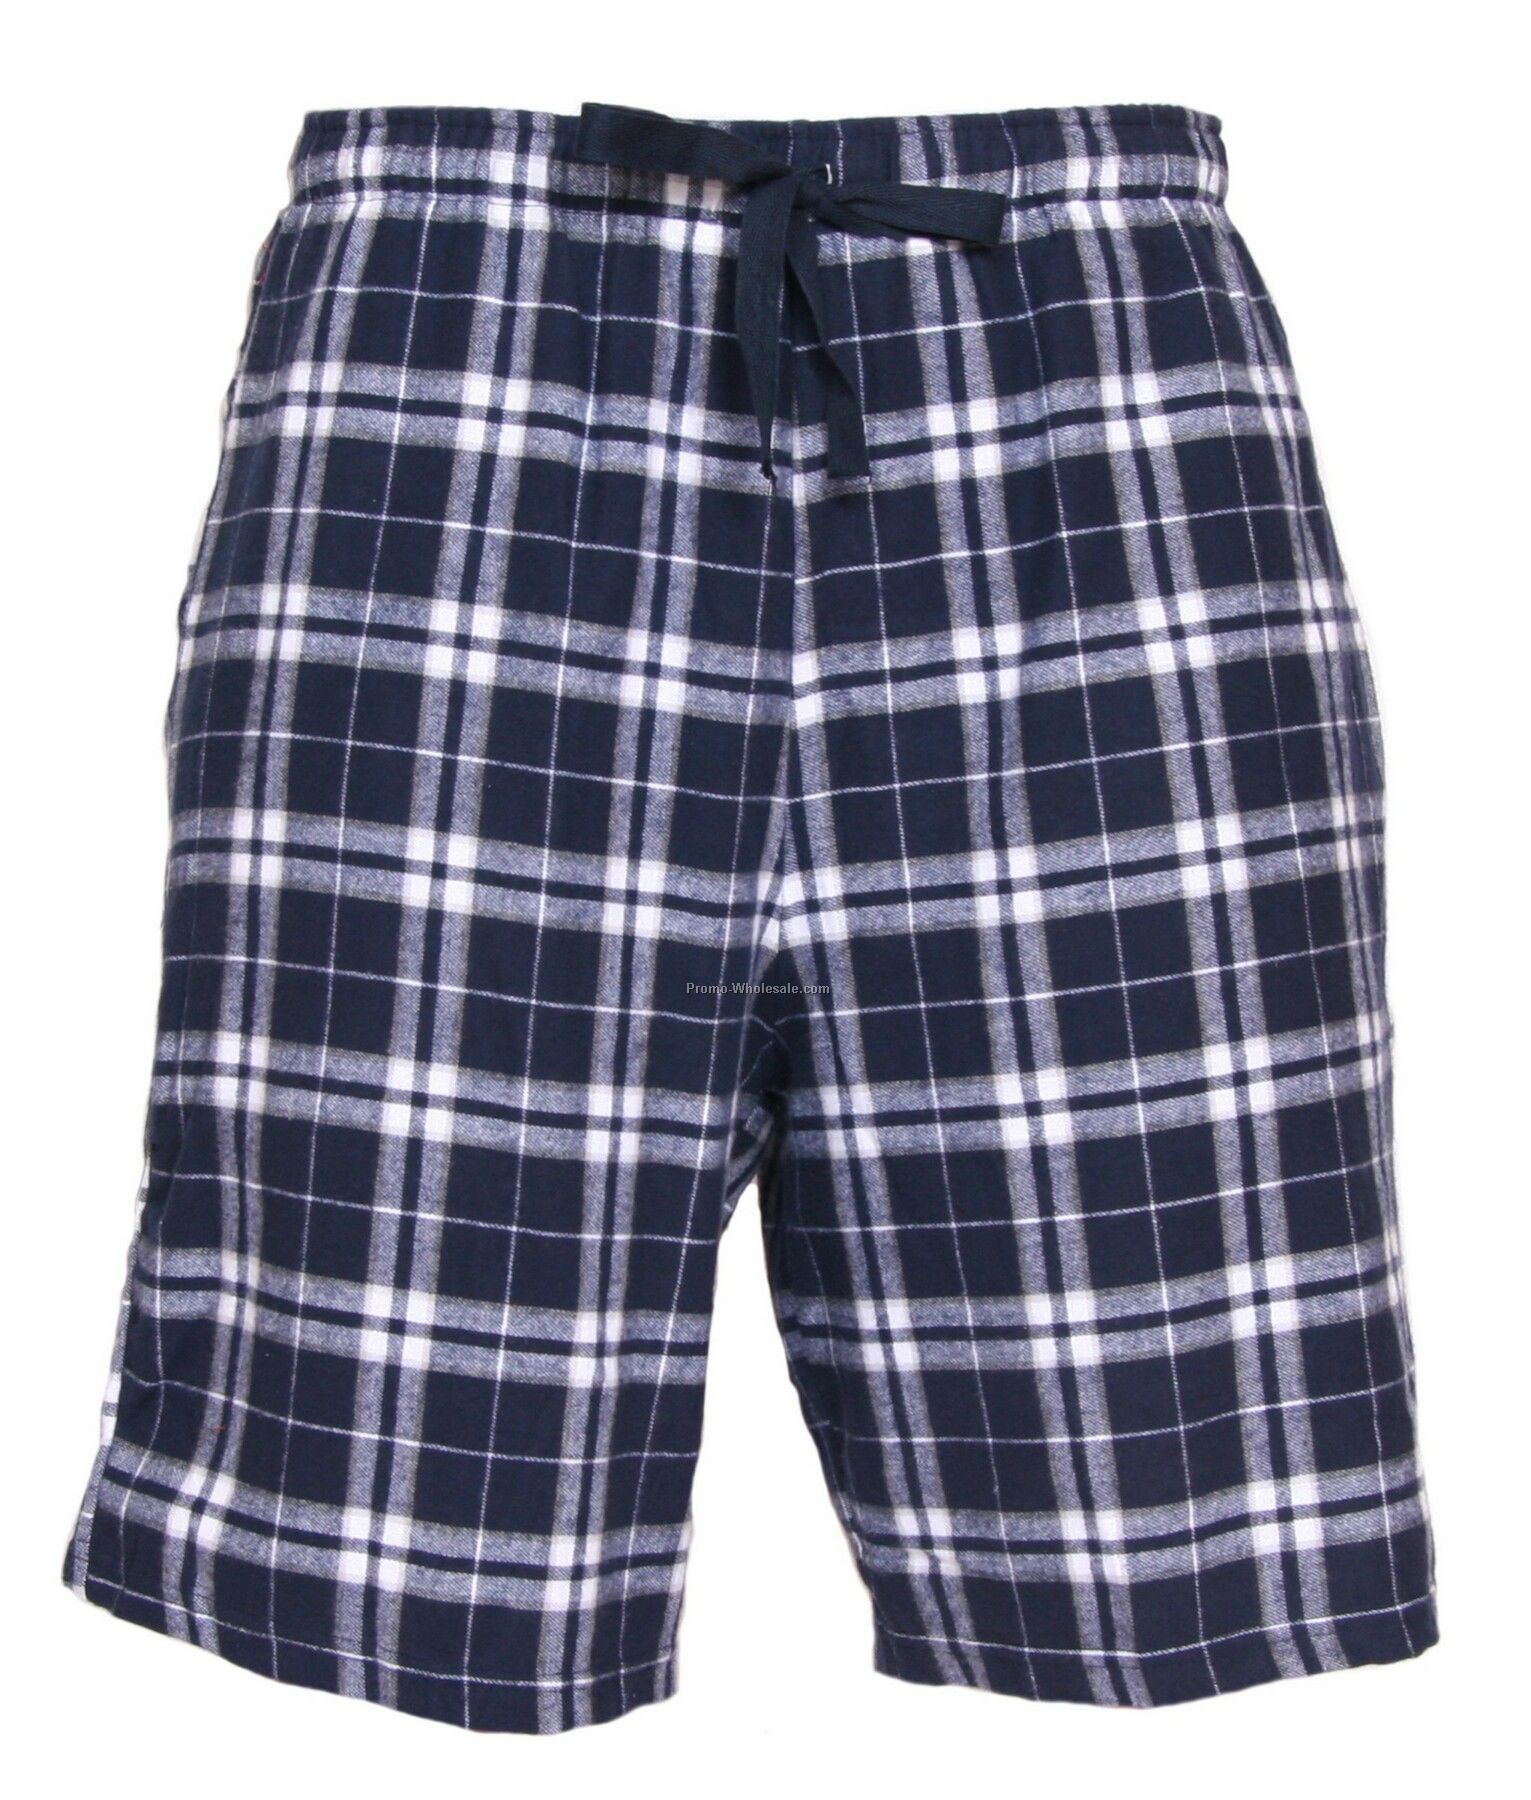 Youths' Navy Blue/Silver Flannel Dorm Shorts (Ys-yl)